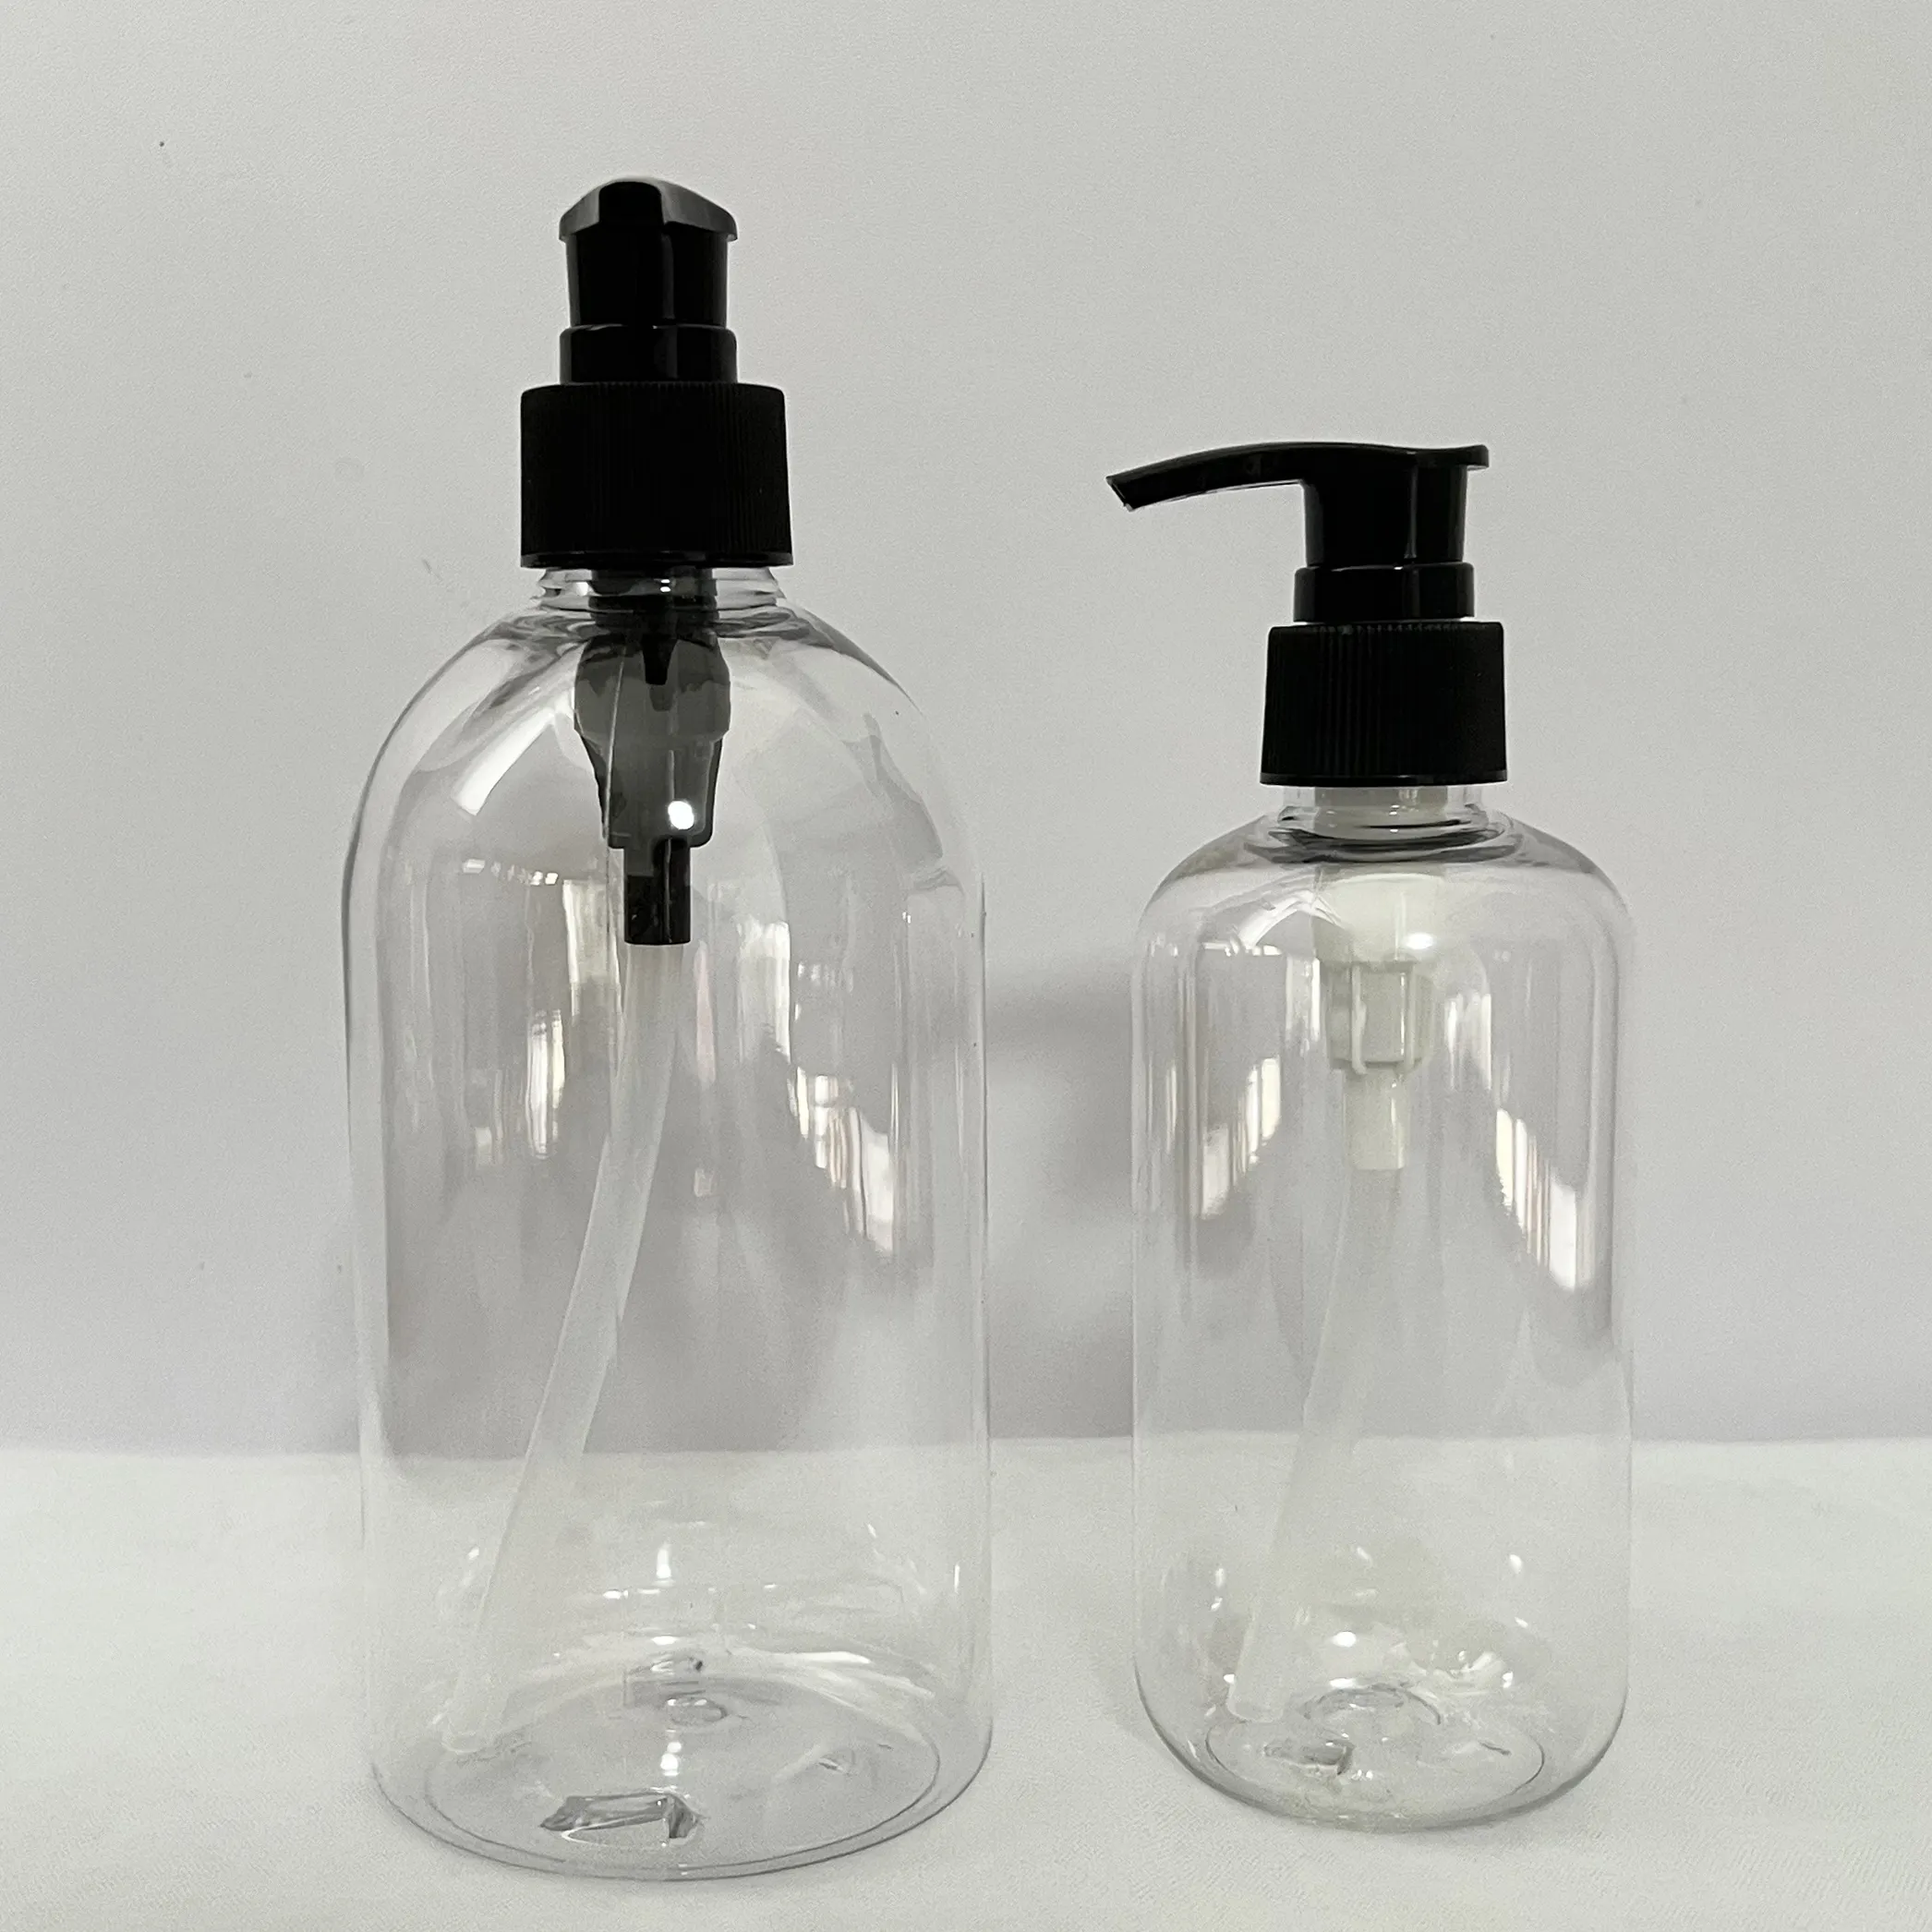 500ml Pump Bottles 10 oz Empty Plastic Pump Bottles Dispenser Shampoo Bottle Containers with Travel Lock for Liquid Soap Lotions